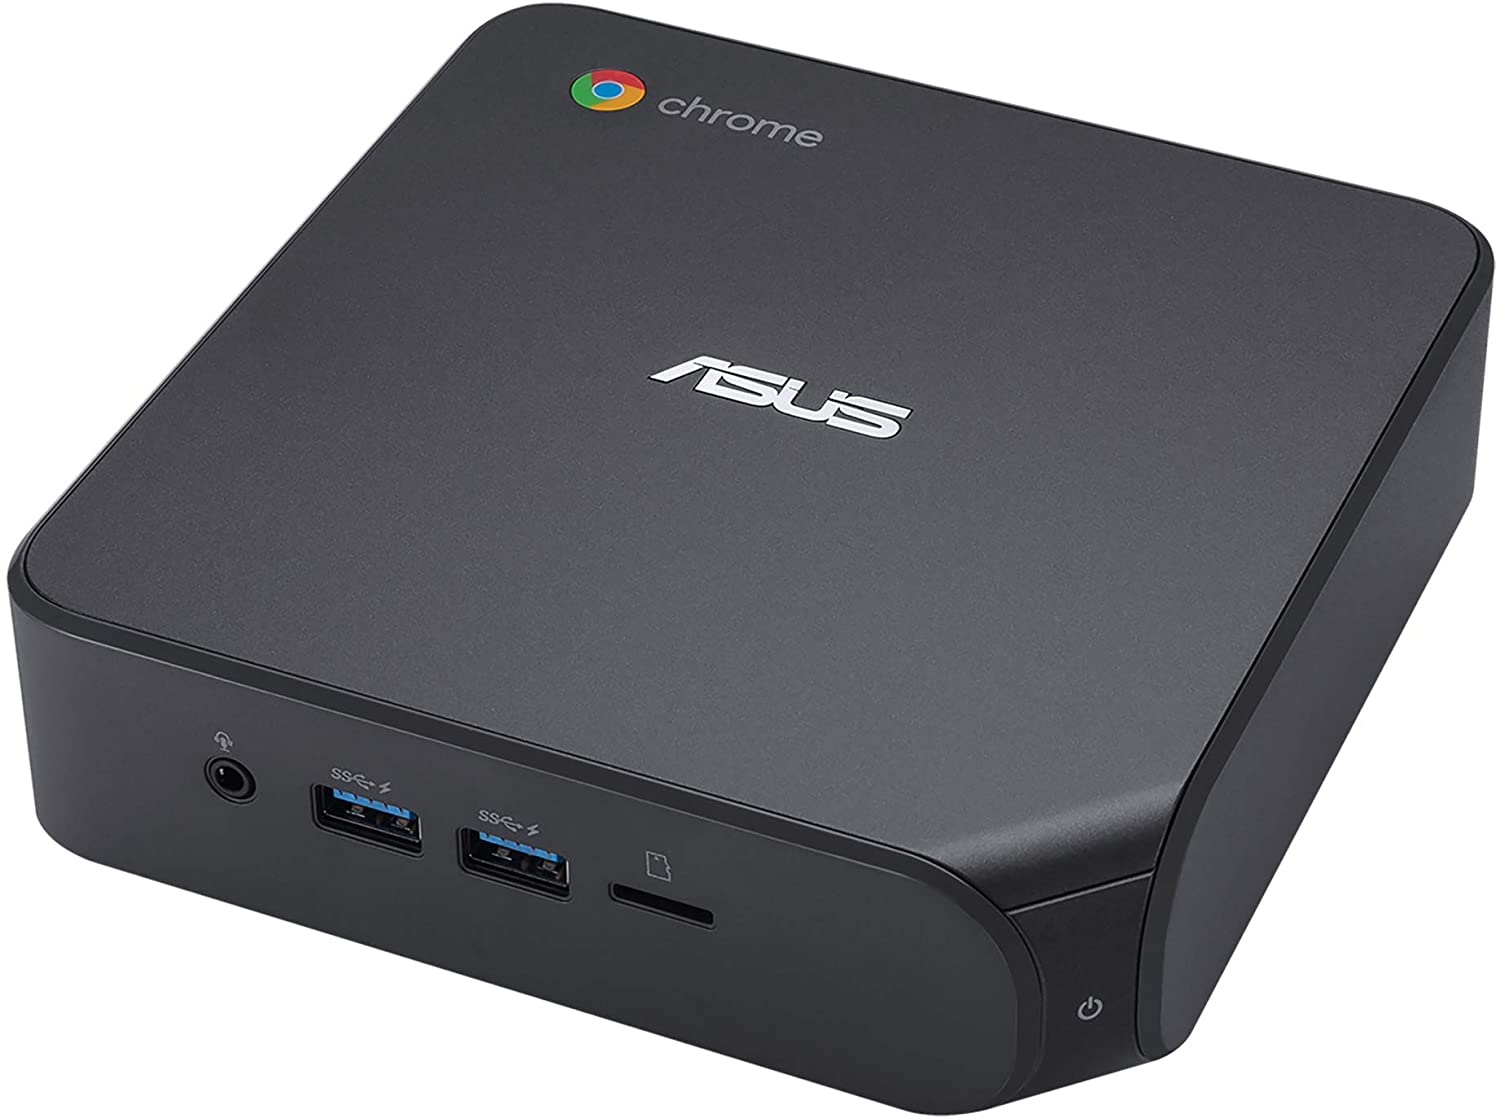 ASUS Chromebox 4 with Intel Celeron, 4GB RAM, 32GB eMMC storage, Power/DisplayPort Over Type C, Dual HDMI, Gigabit LAN, WiFi 6, USB 3.2, MicroSD Card Reader, VESA Mount, Chrome OS